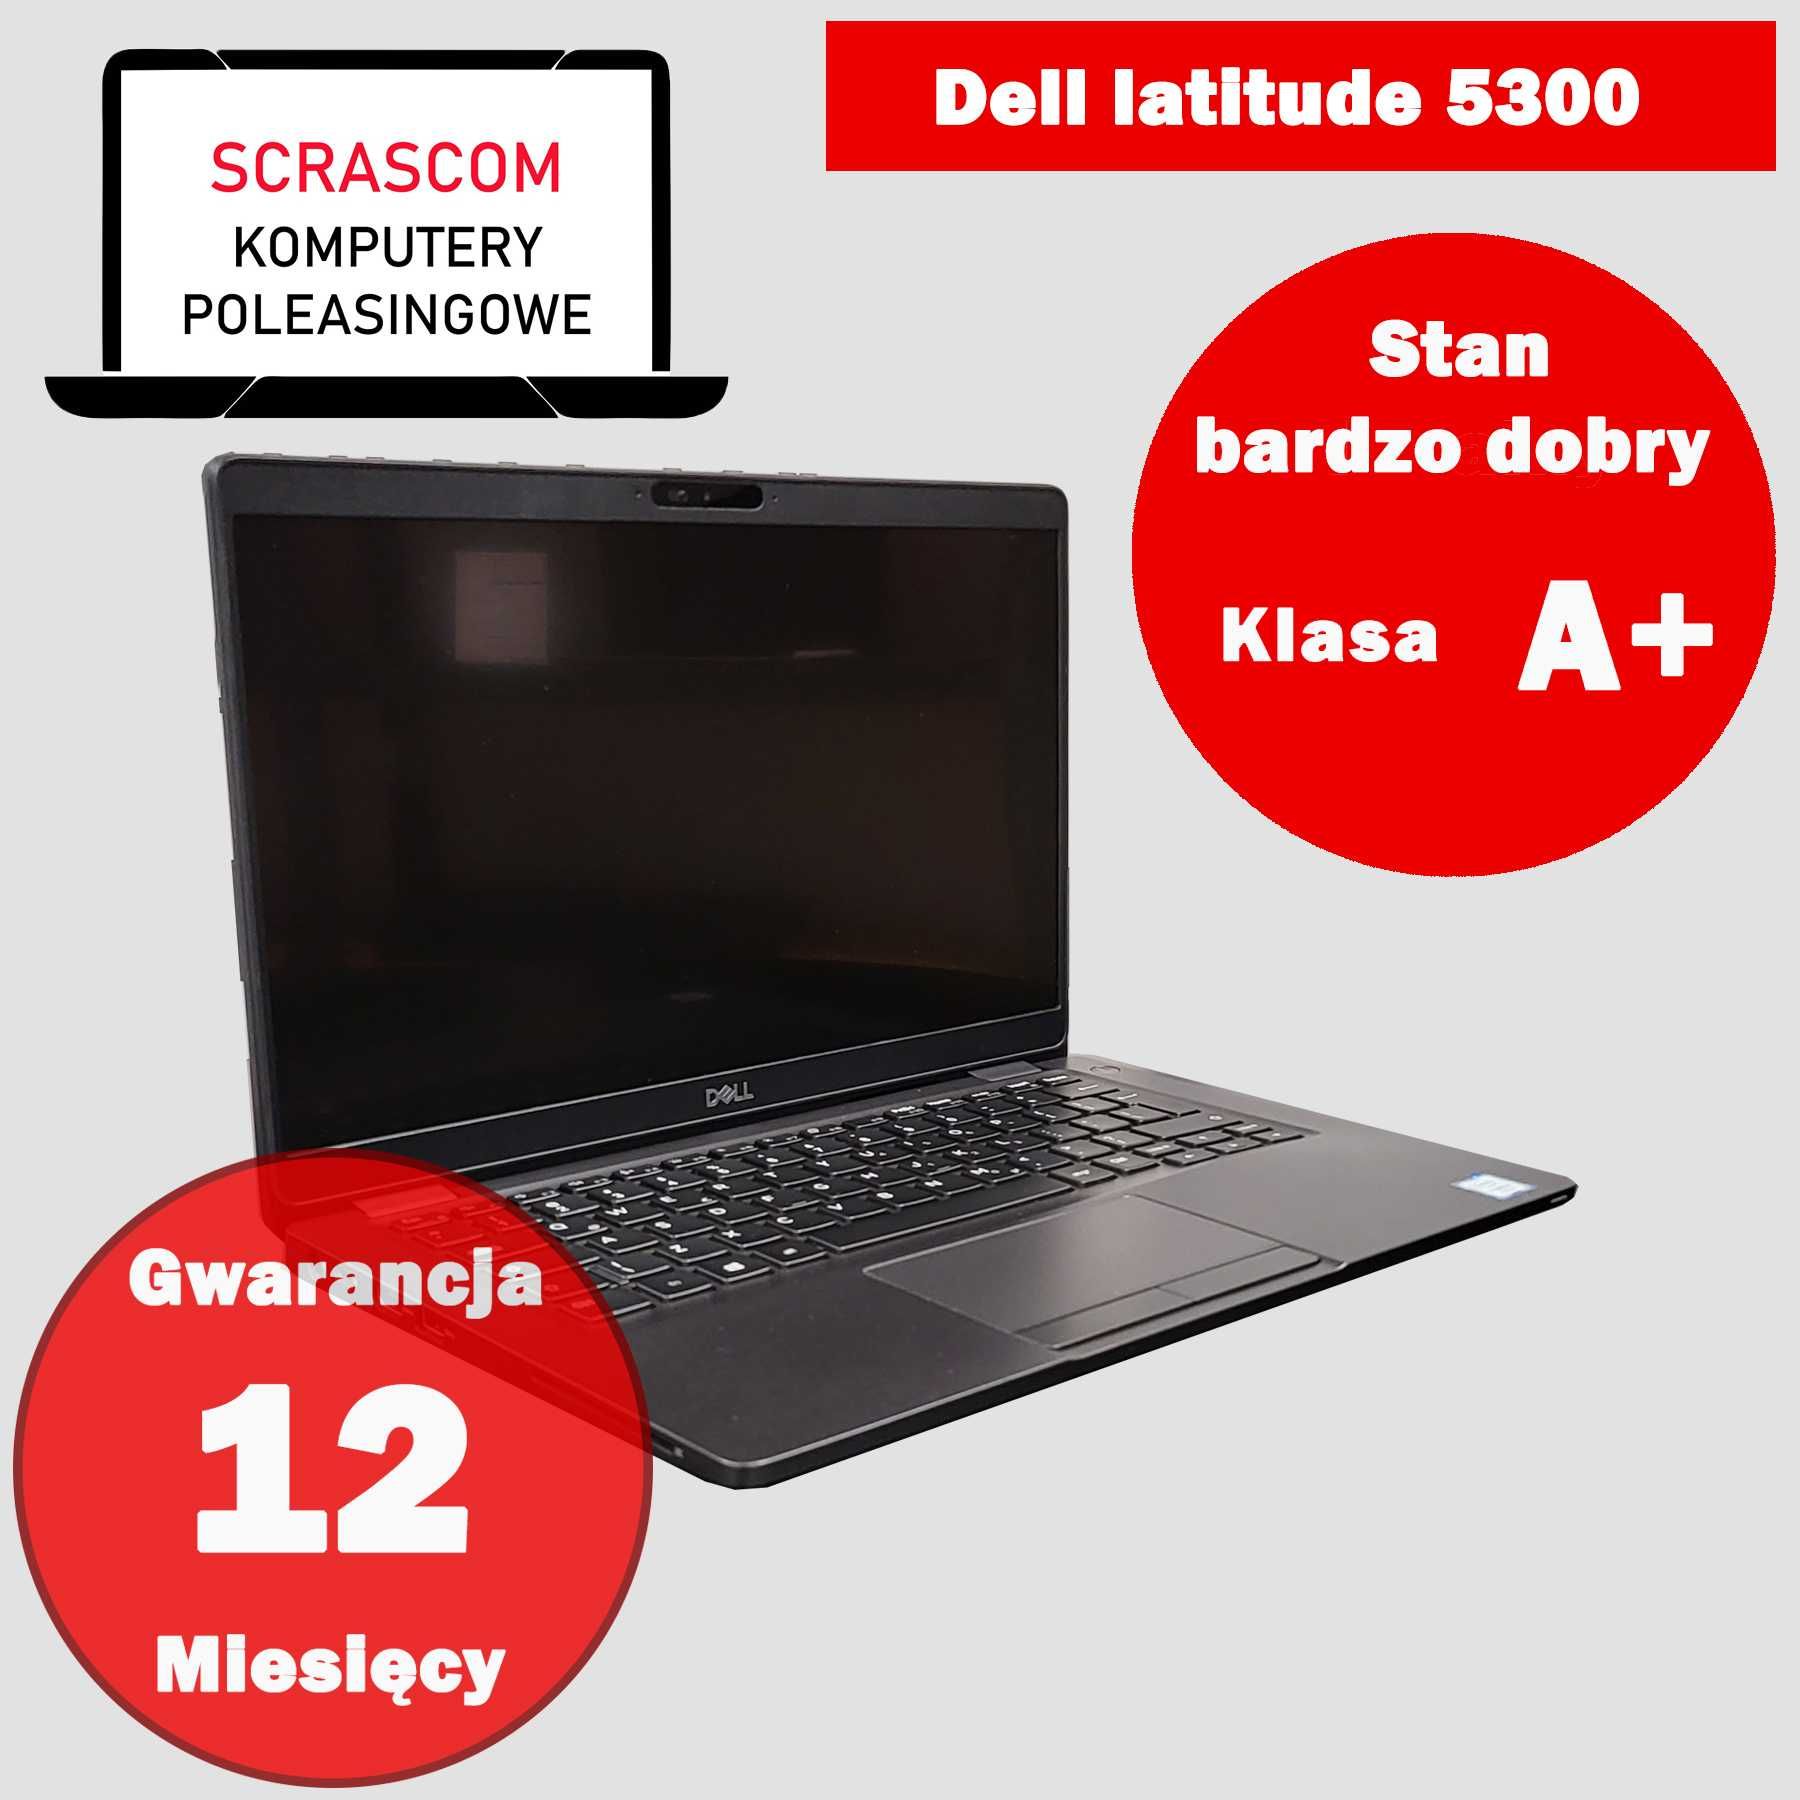 Laptop Dell Latitude 5300 i5 16GB 256GB SSD Windows 10 GWAR 12msc